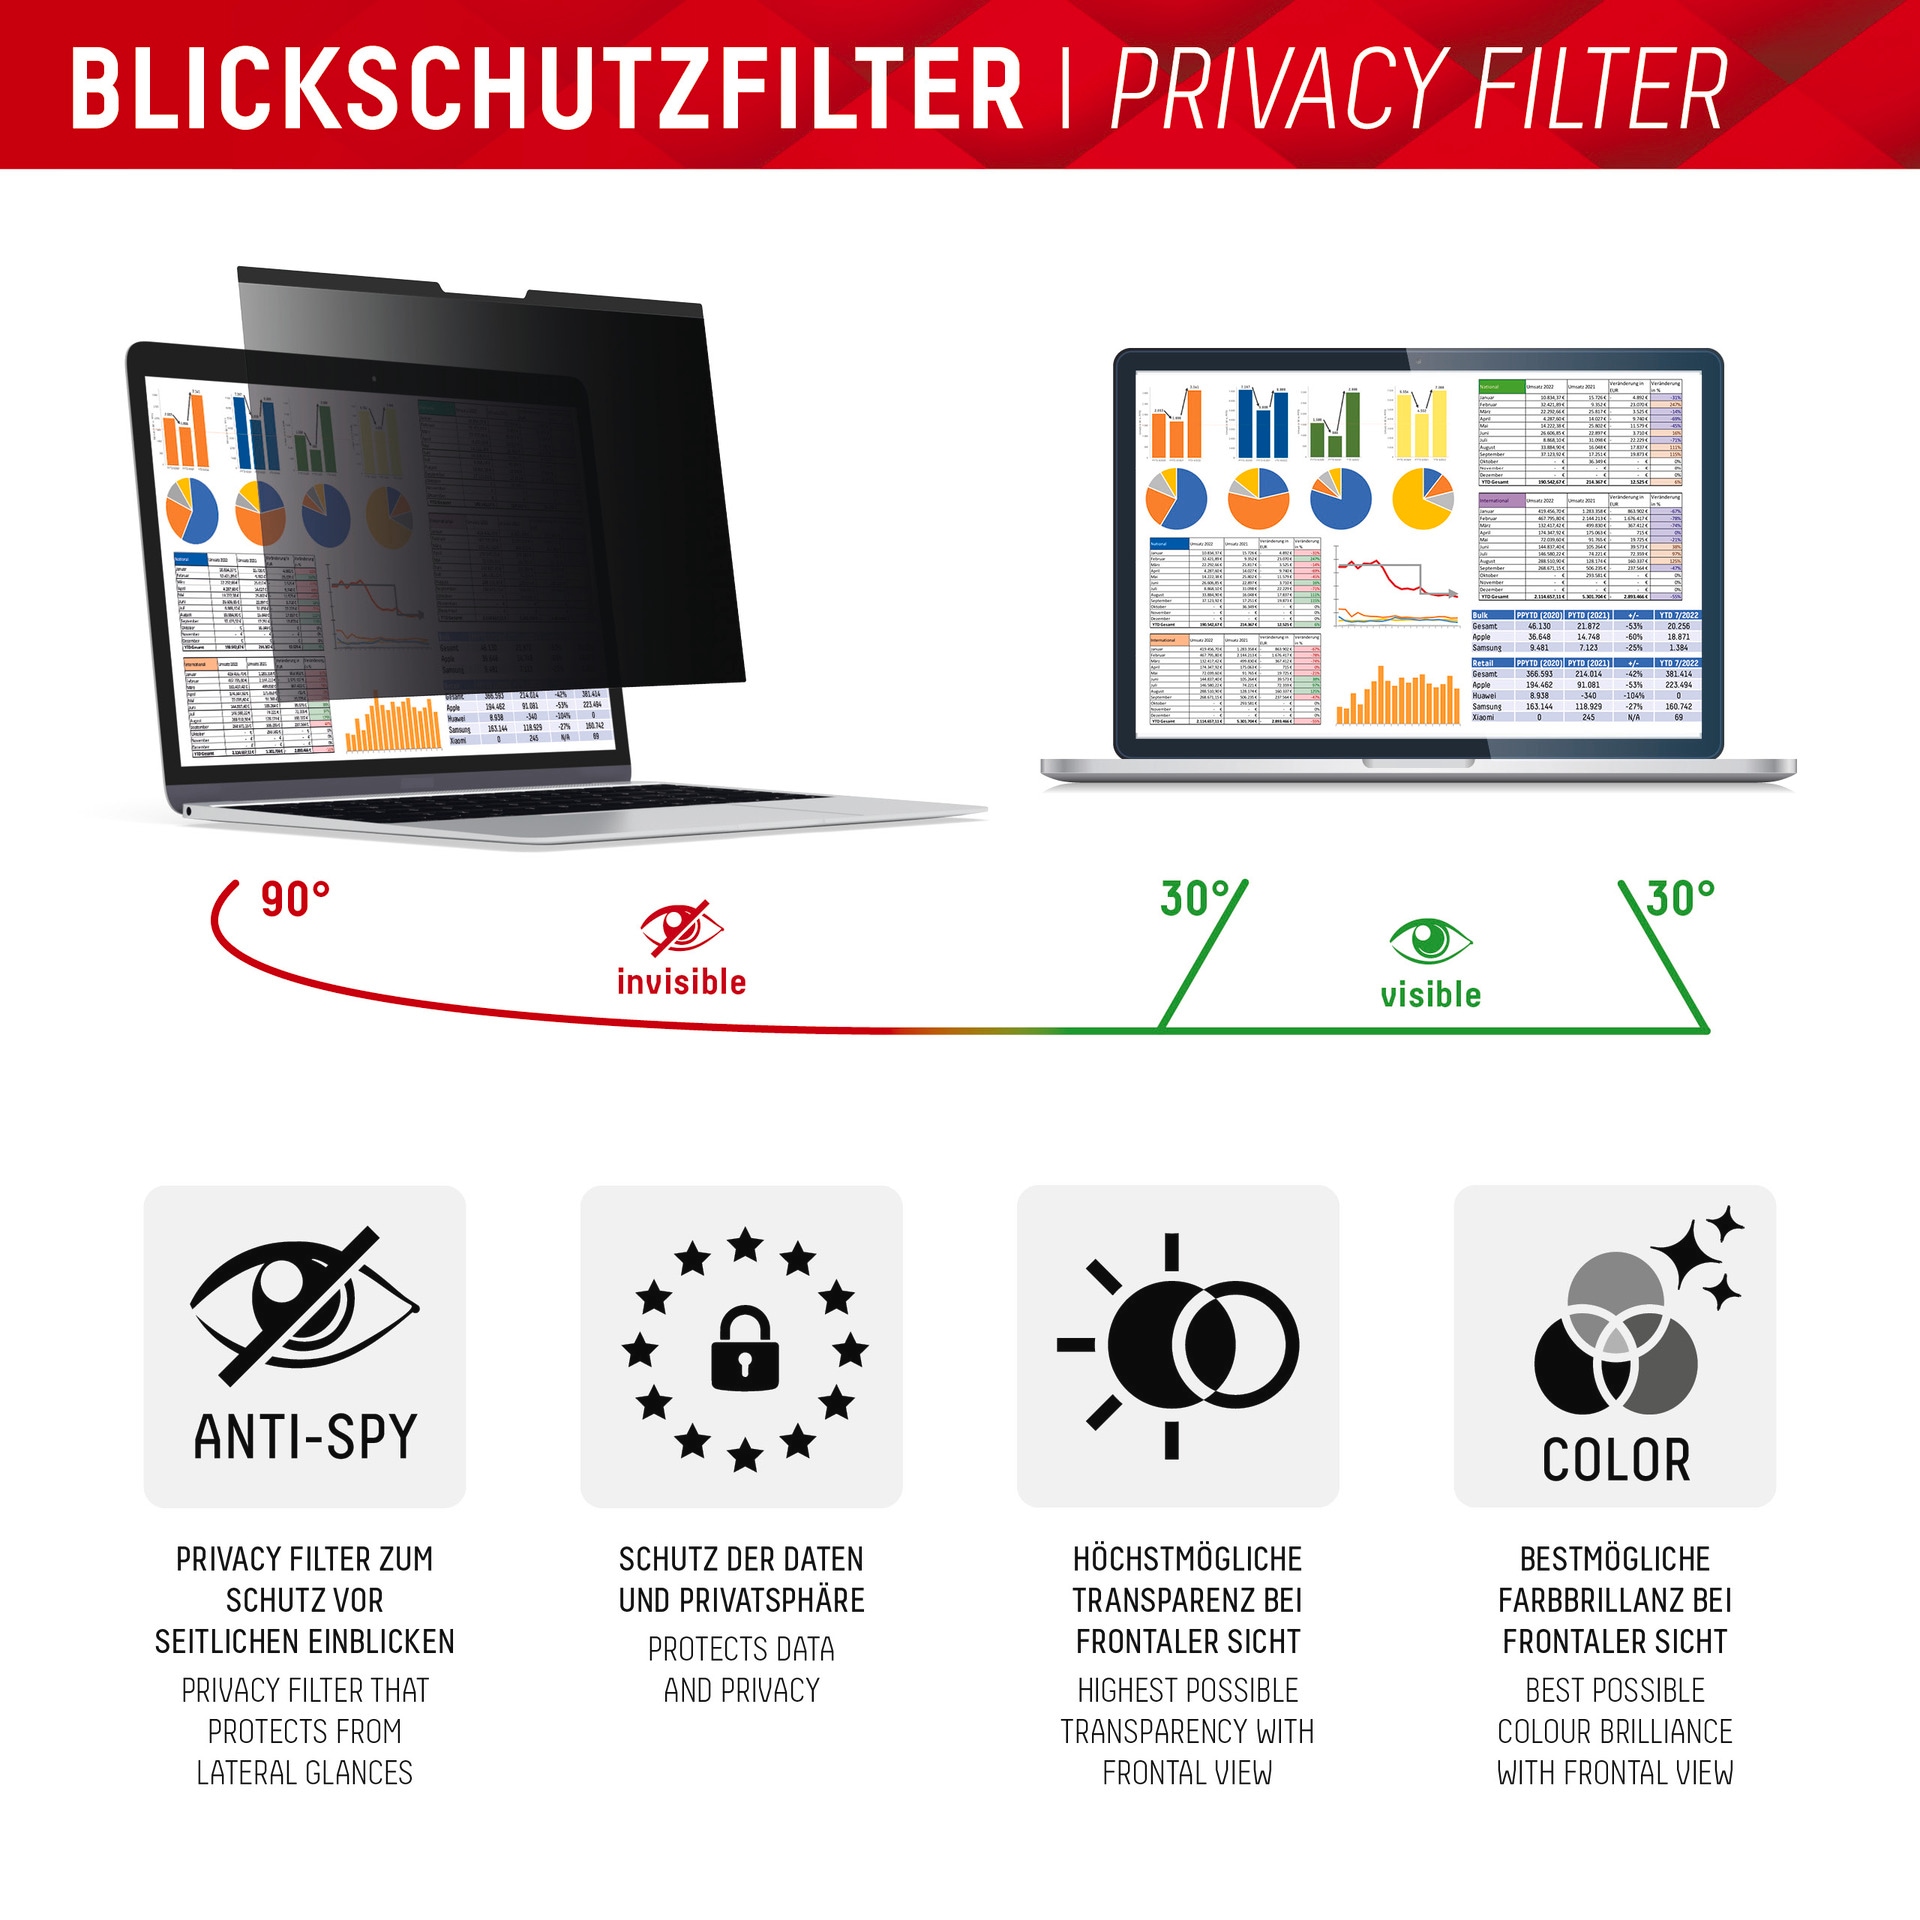 Displex Displayschutzfolie »Privacy Safe - Universal 13,3, 16:9«, Blickschutzfilter